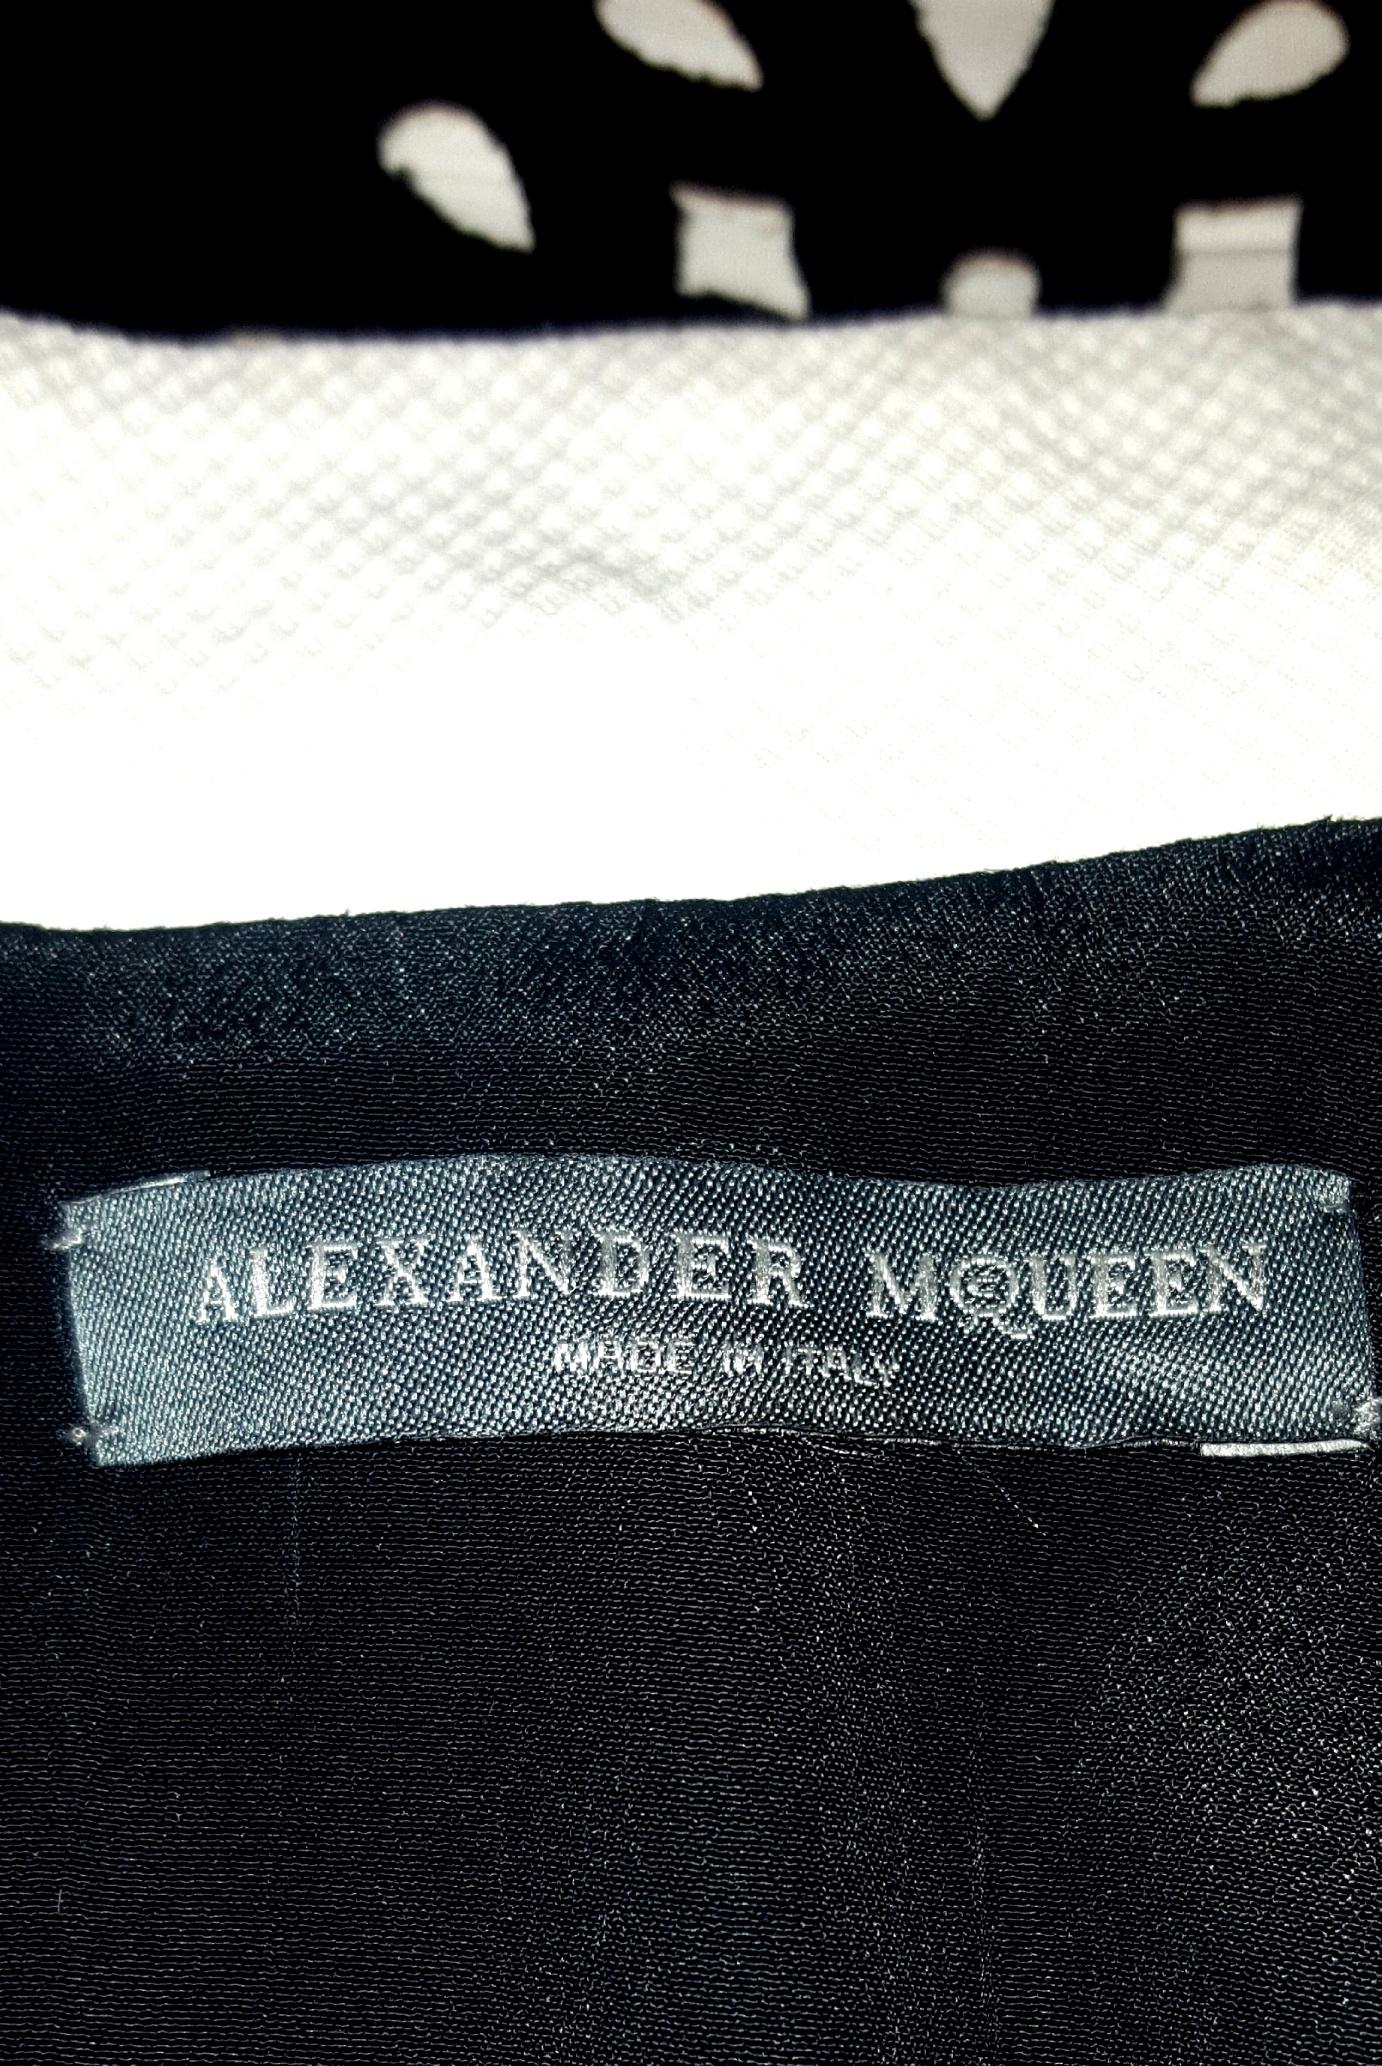 Alexander McQueen Black & White Multi Fabric Laser Cut 2012 Runway Dress  For Sale 1